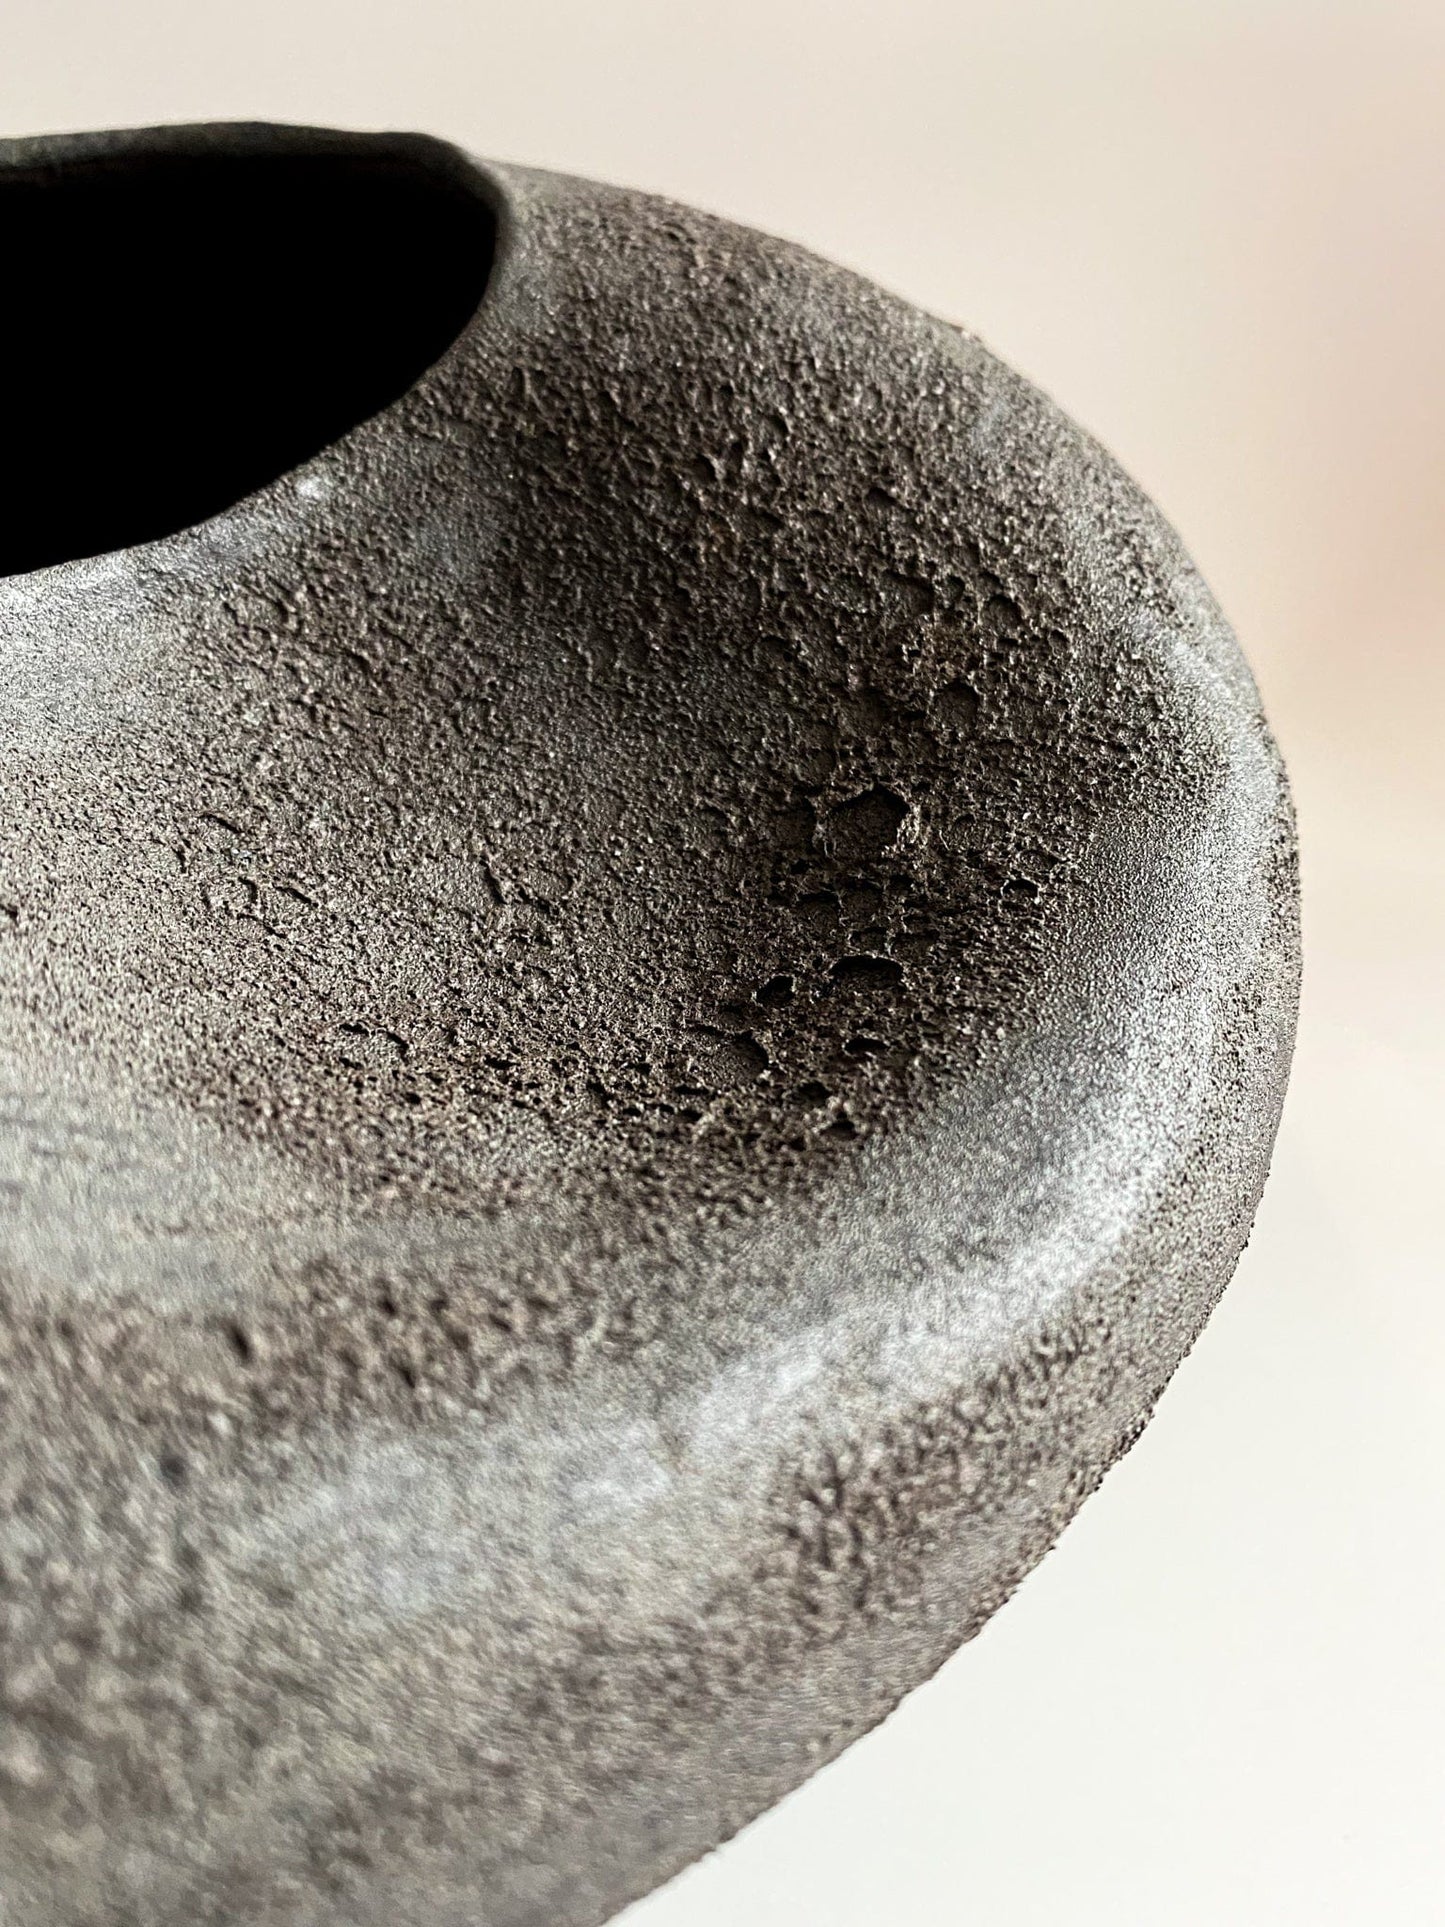 Black Textured Ceramic Vase by Maku Ceramics Vases